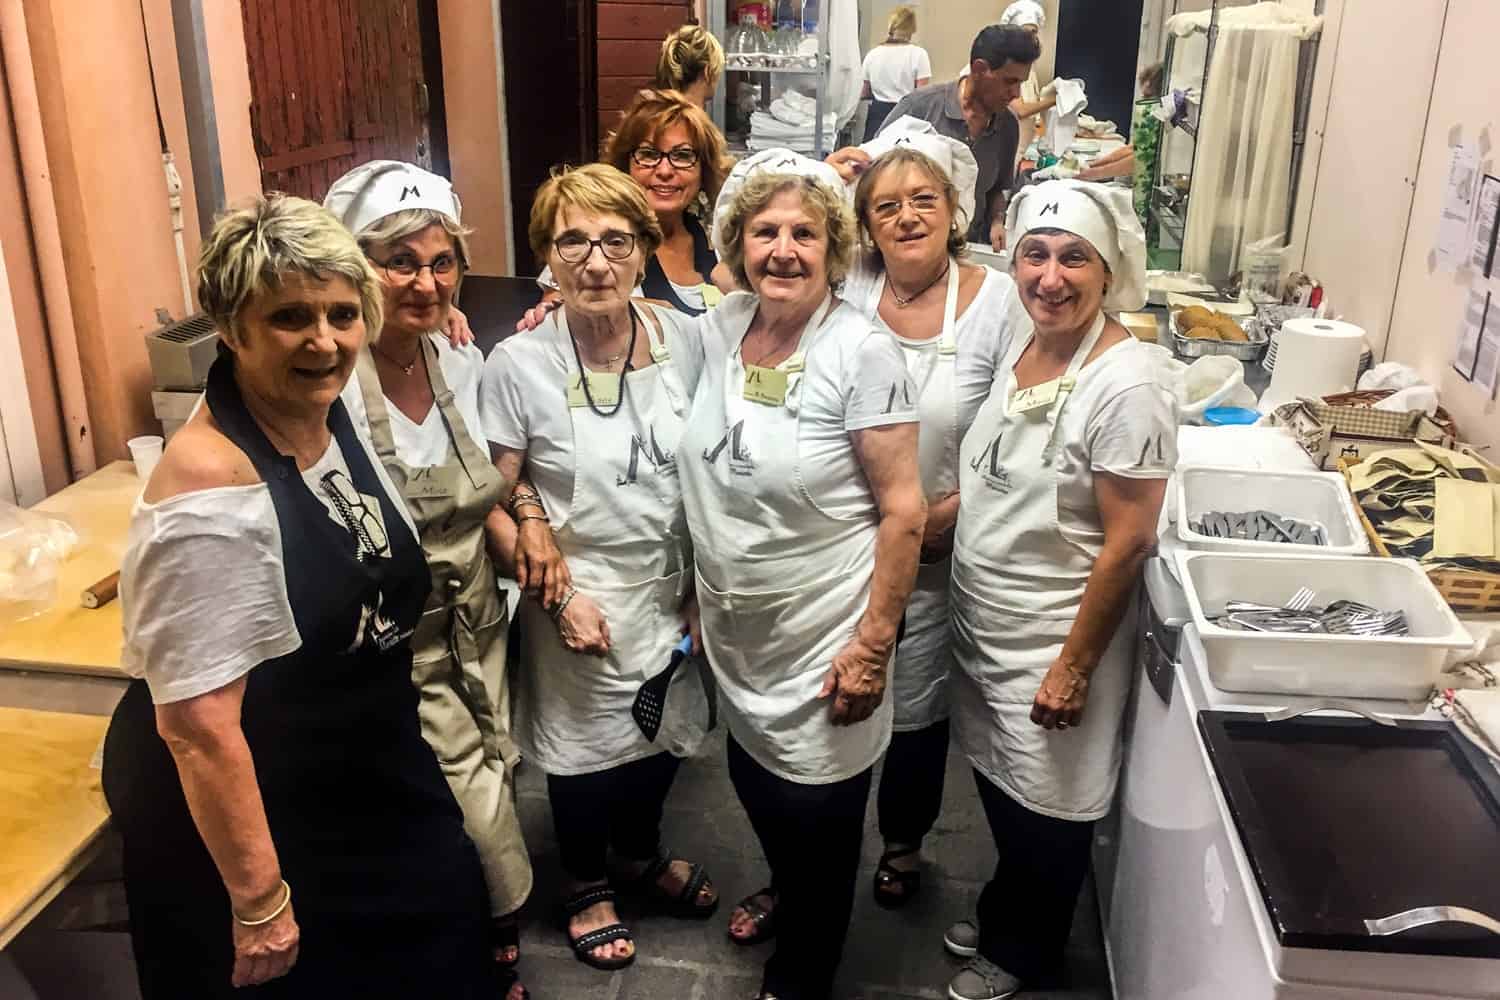 Members of Associazione delle Mariette cooking during Artusi food Festival, Forlimpopoli